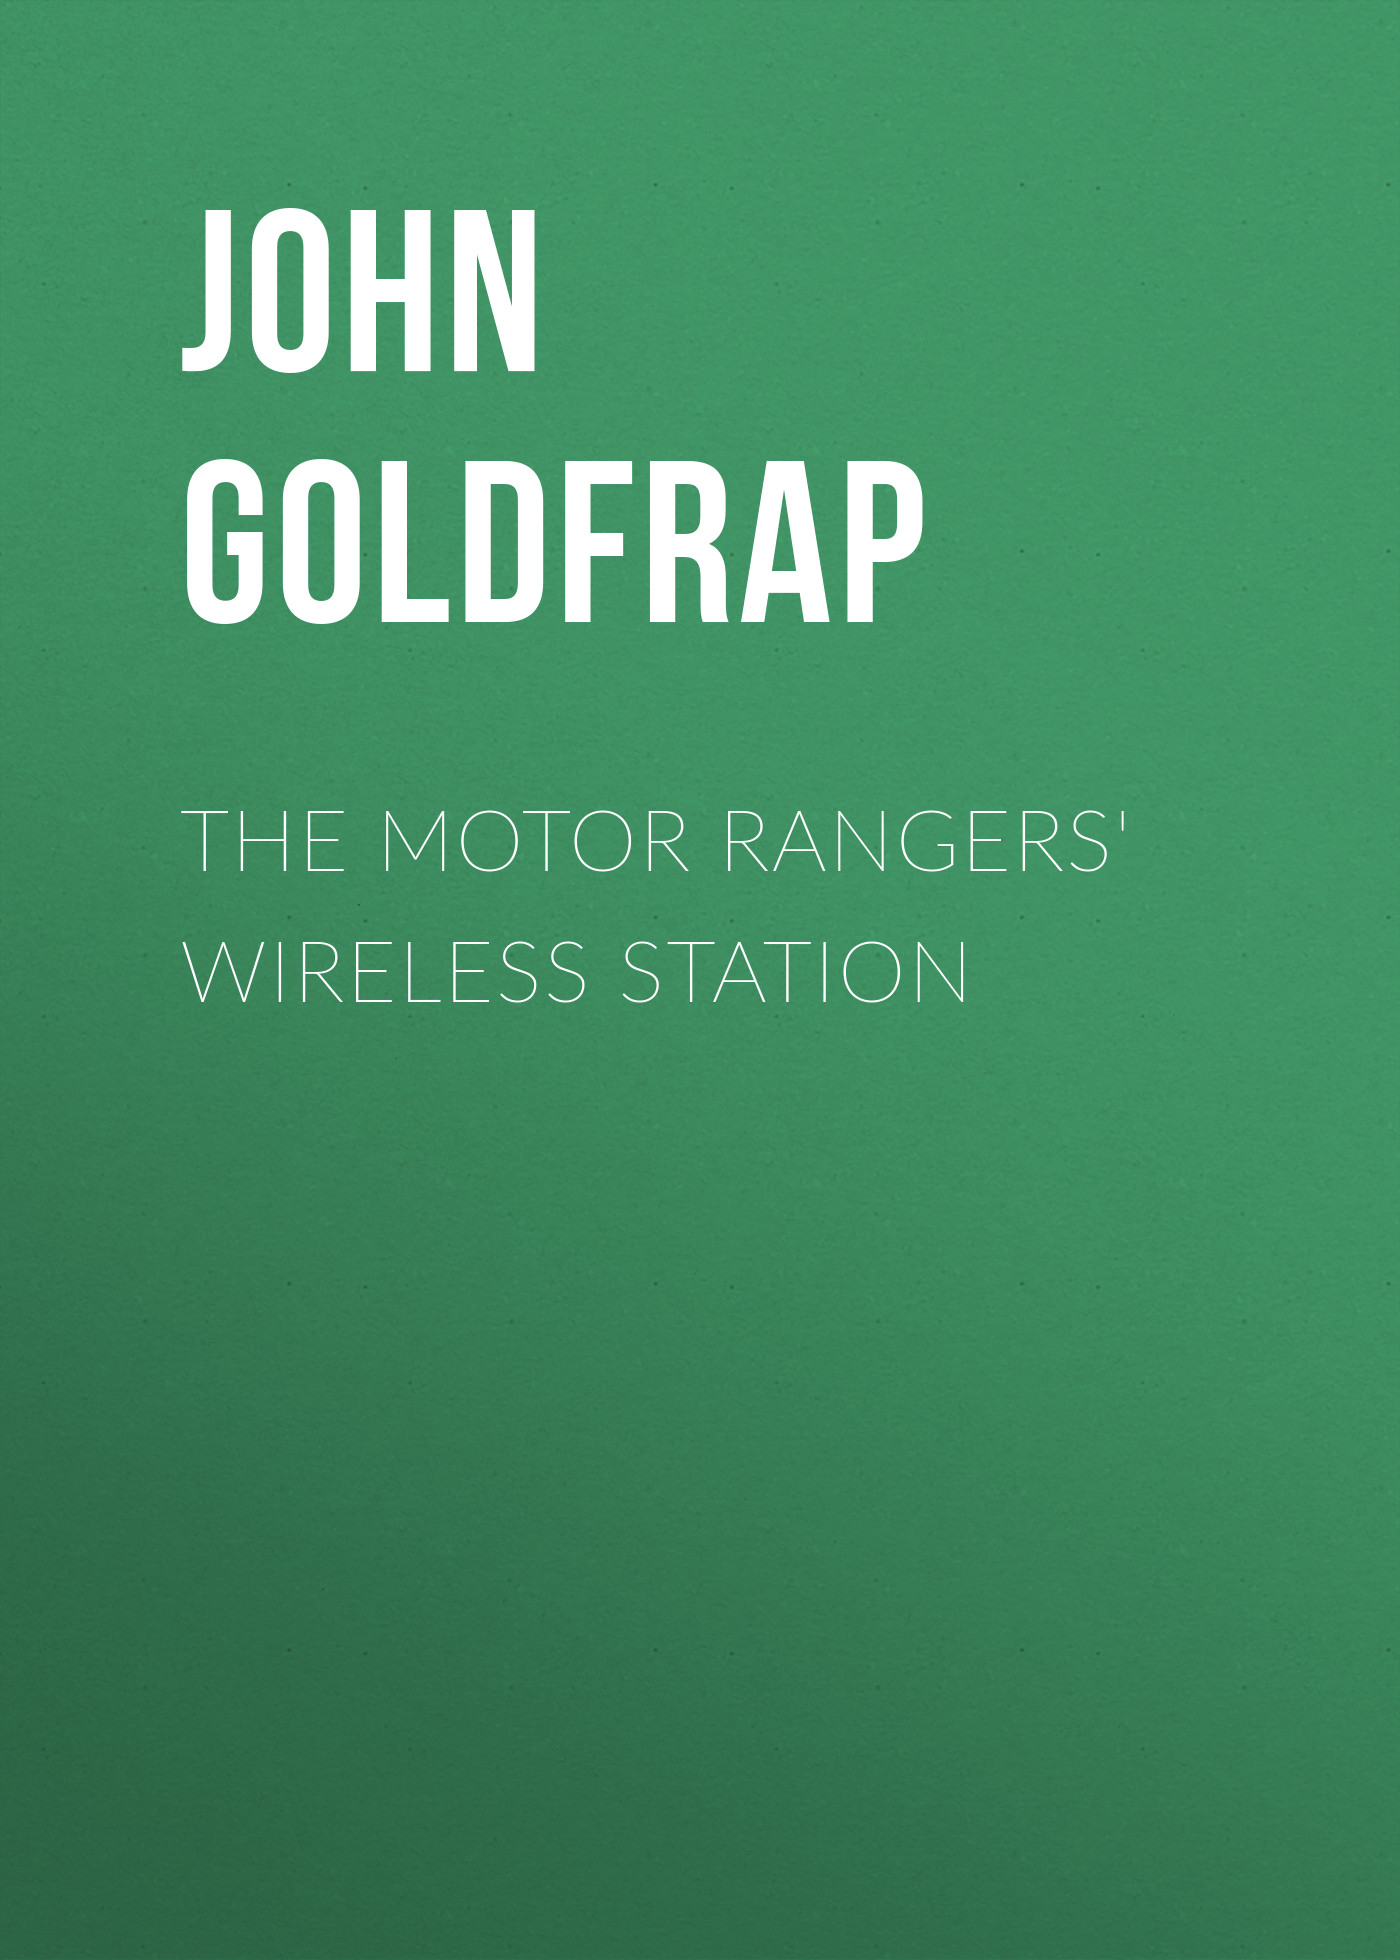 The Motor Rangers'Wireless Station